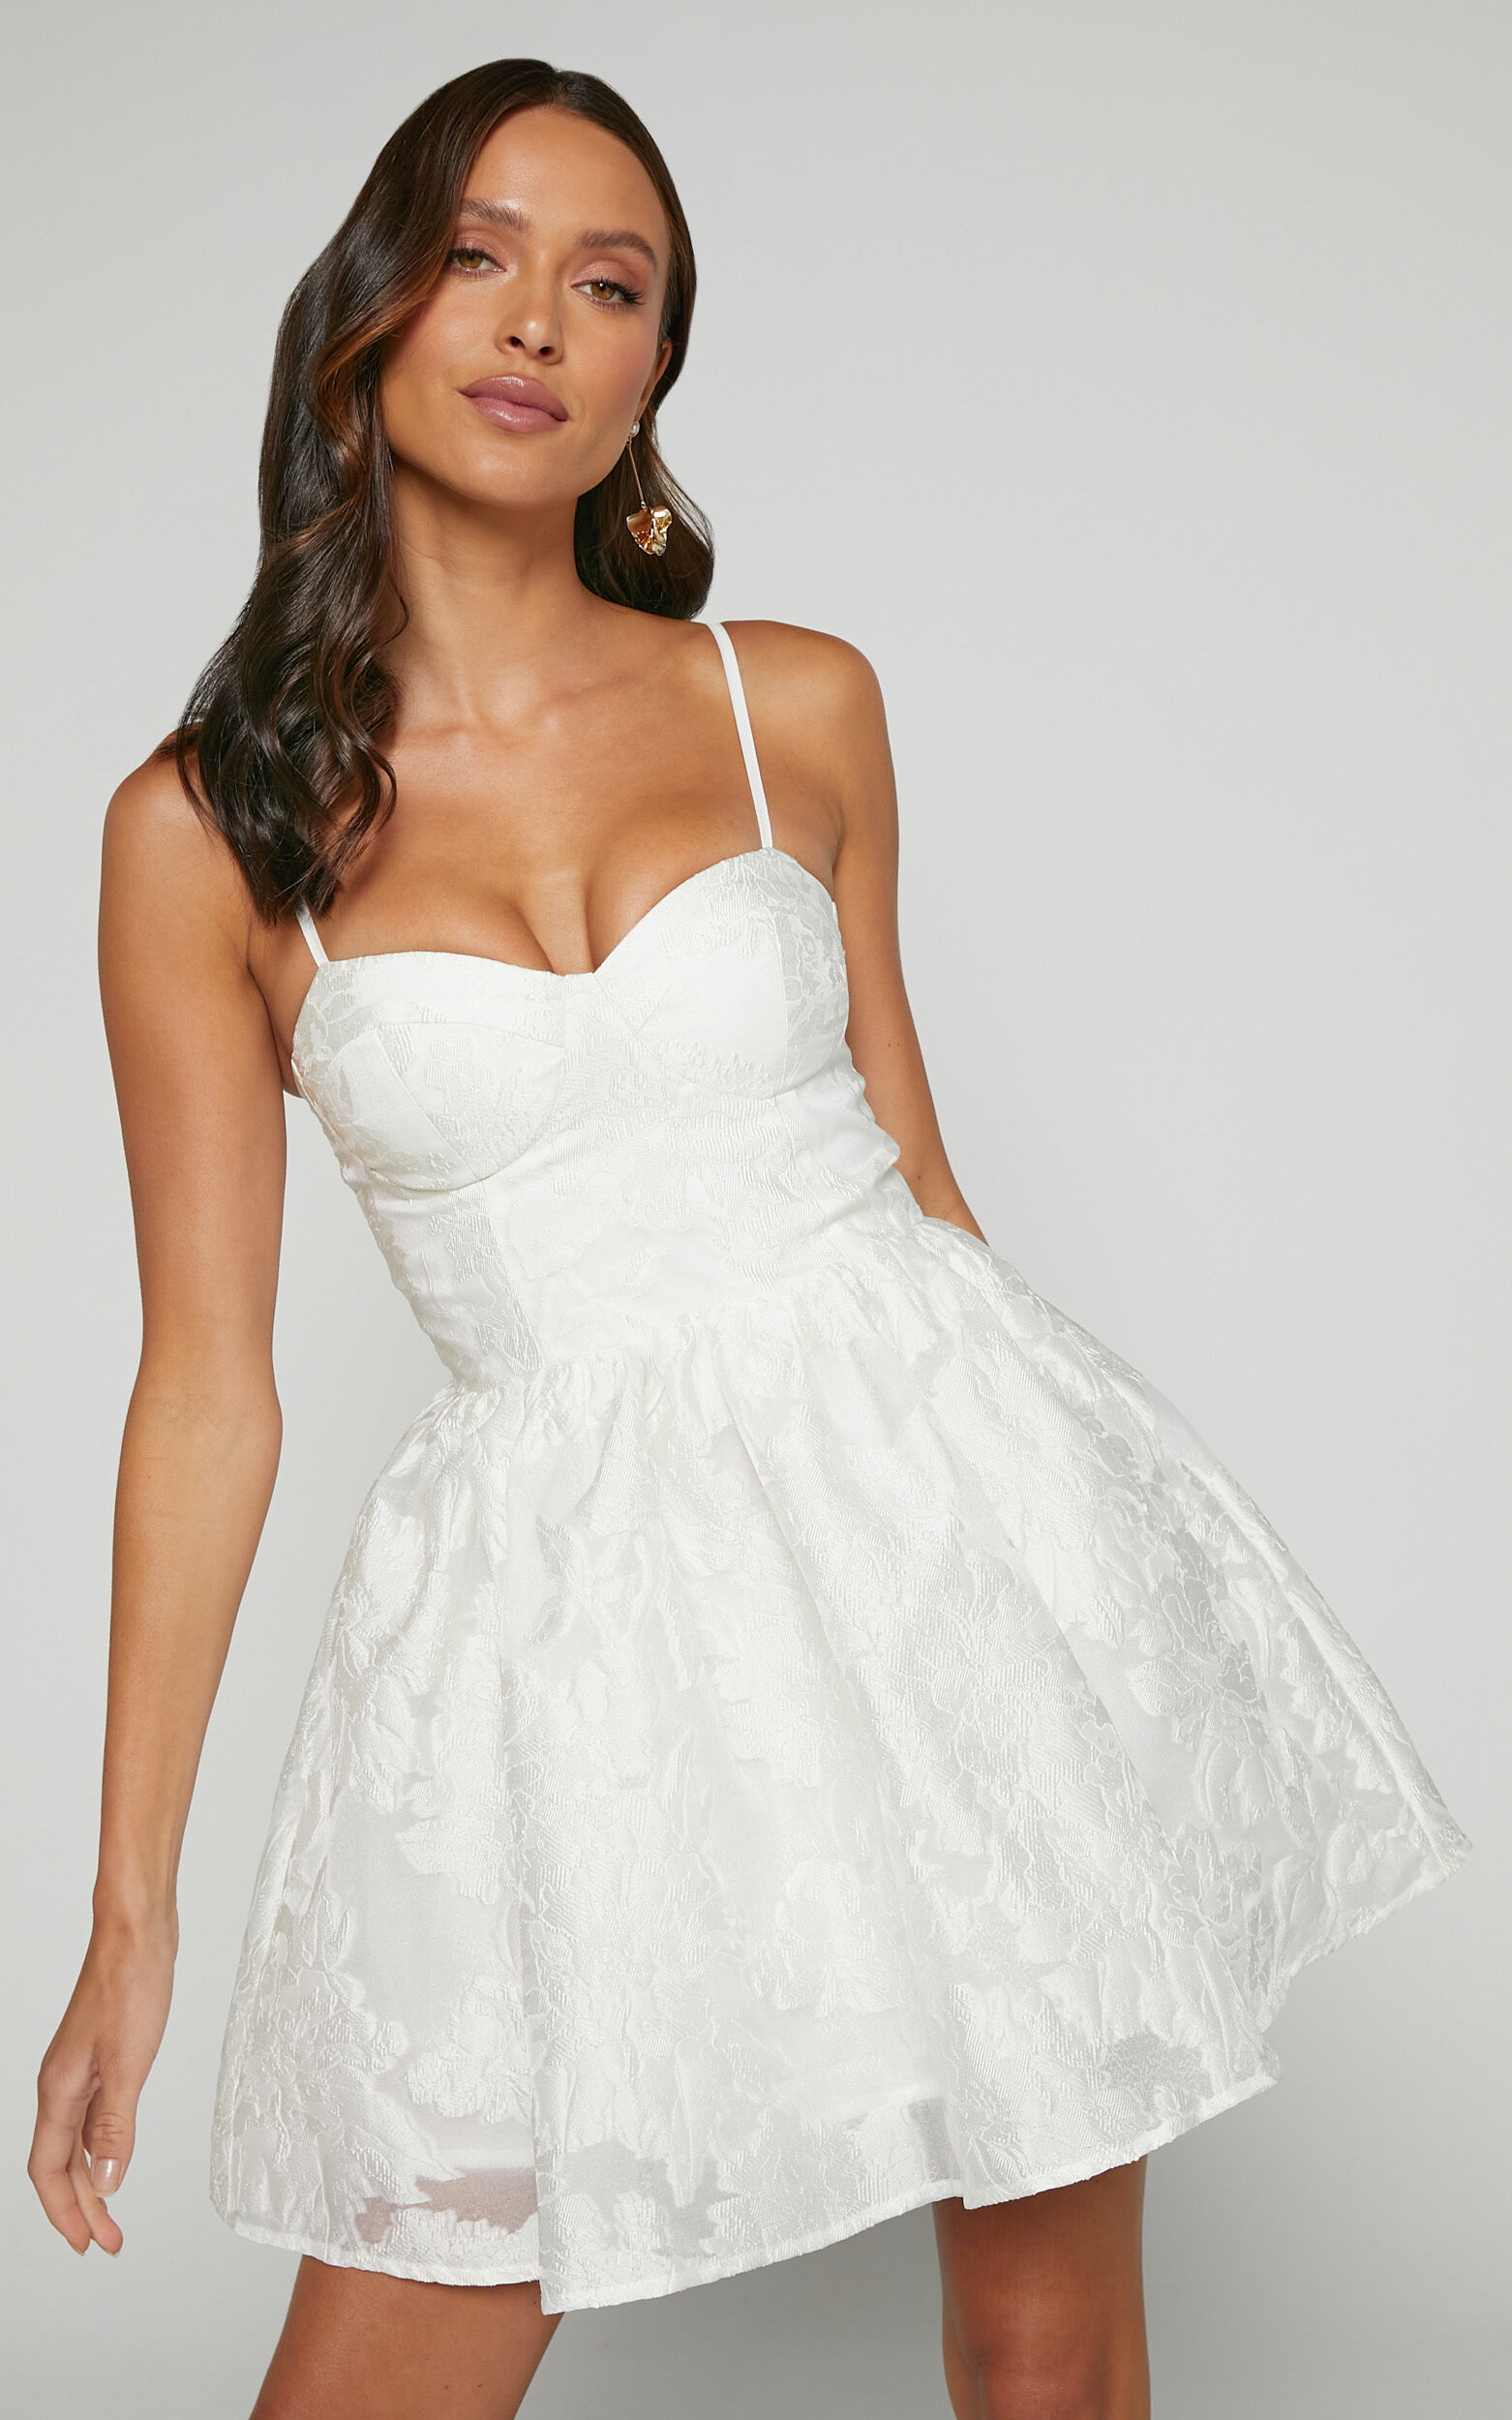 white bustier dress